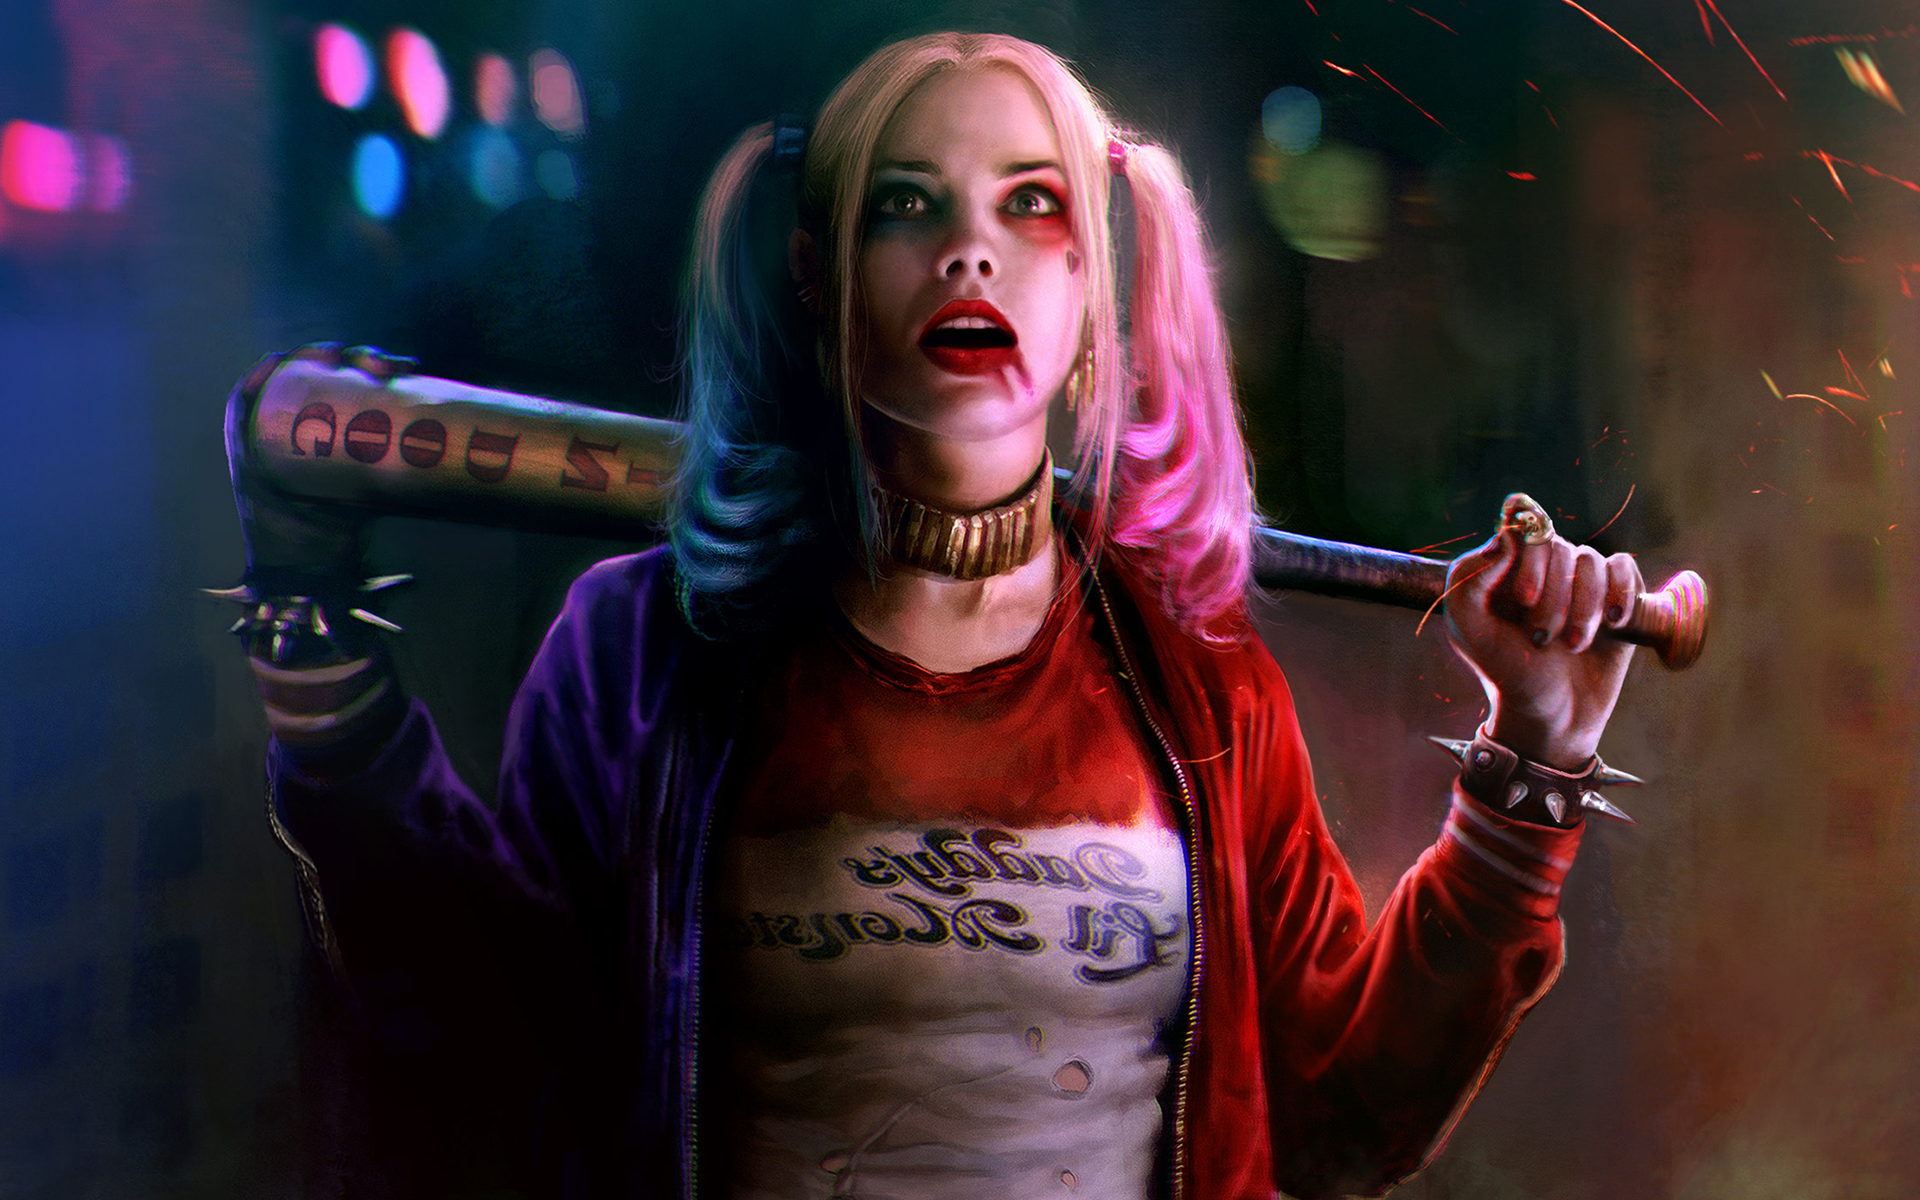 Harley Quinn Background